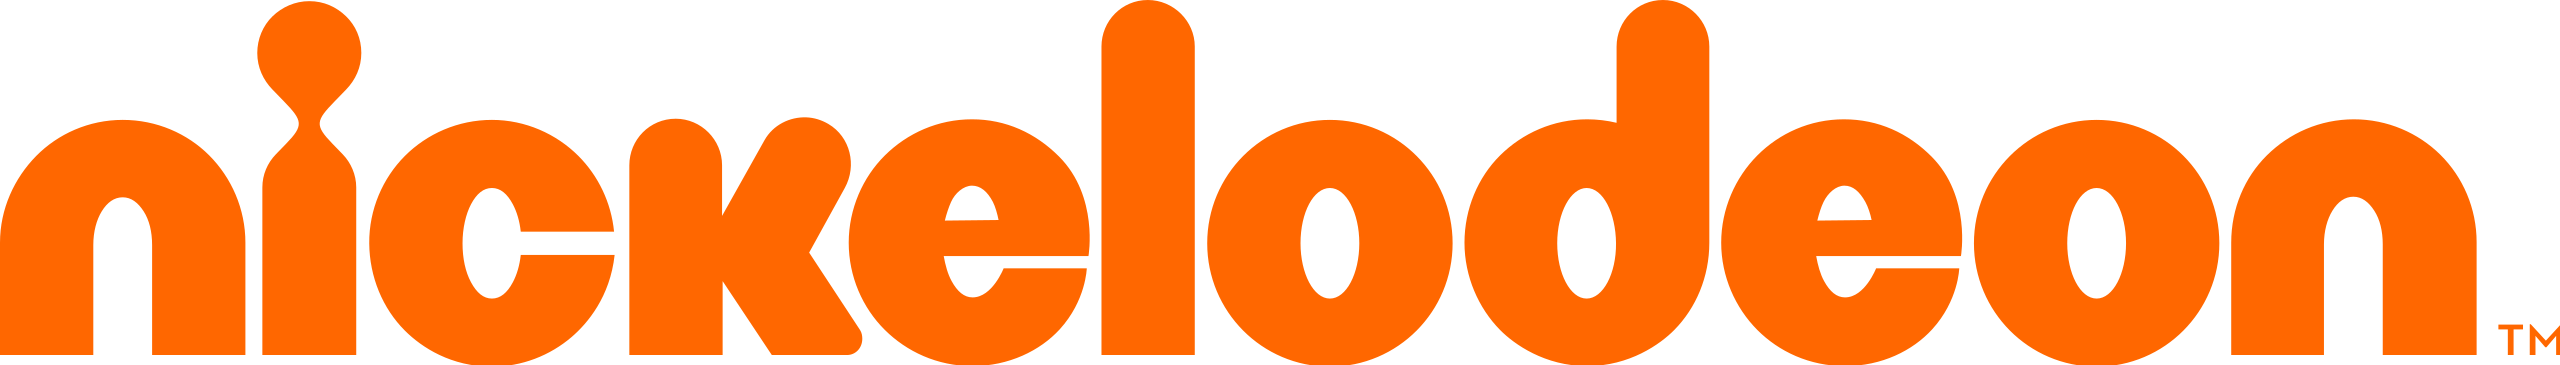 Nickelodeon Logo - KibrisPDR